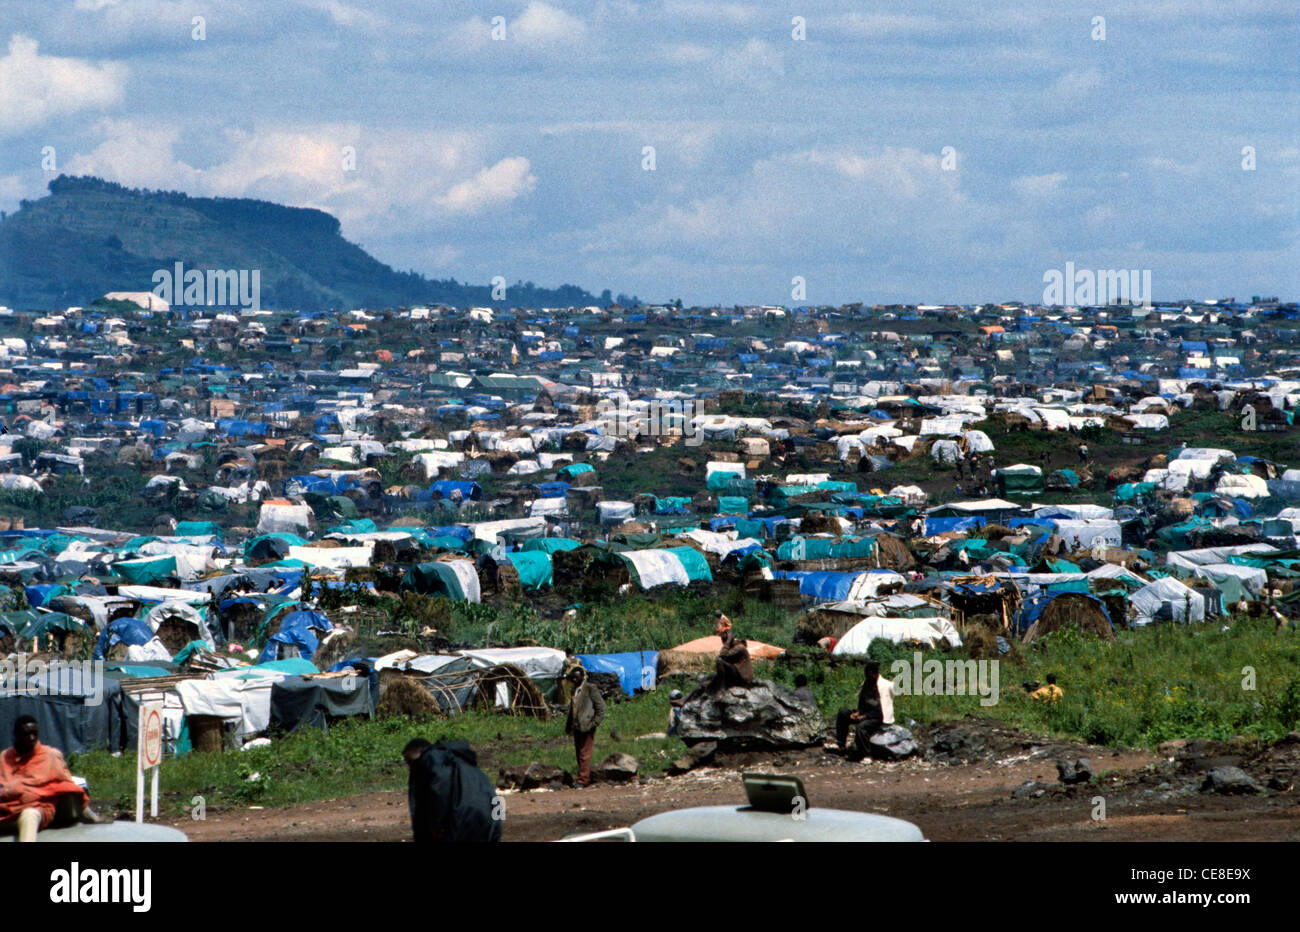 Refugee camp in Goma, Democratic Republic of the Congo in  1995. Area used to house Rwandan Hutus fleeing civil war in Rwanda. Stock Photo